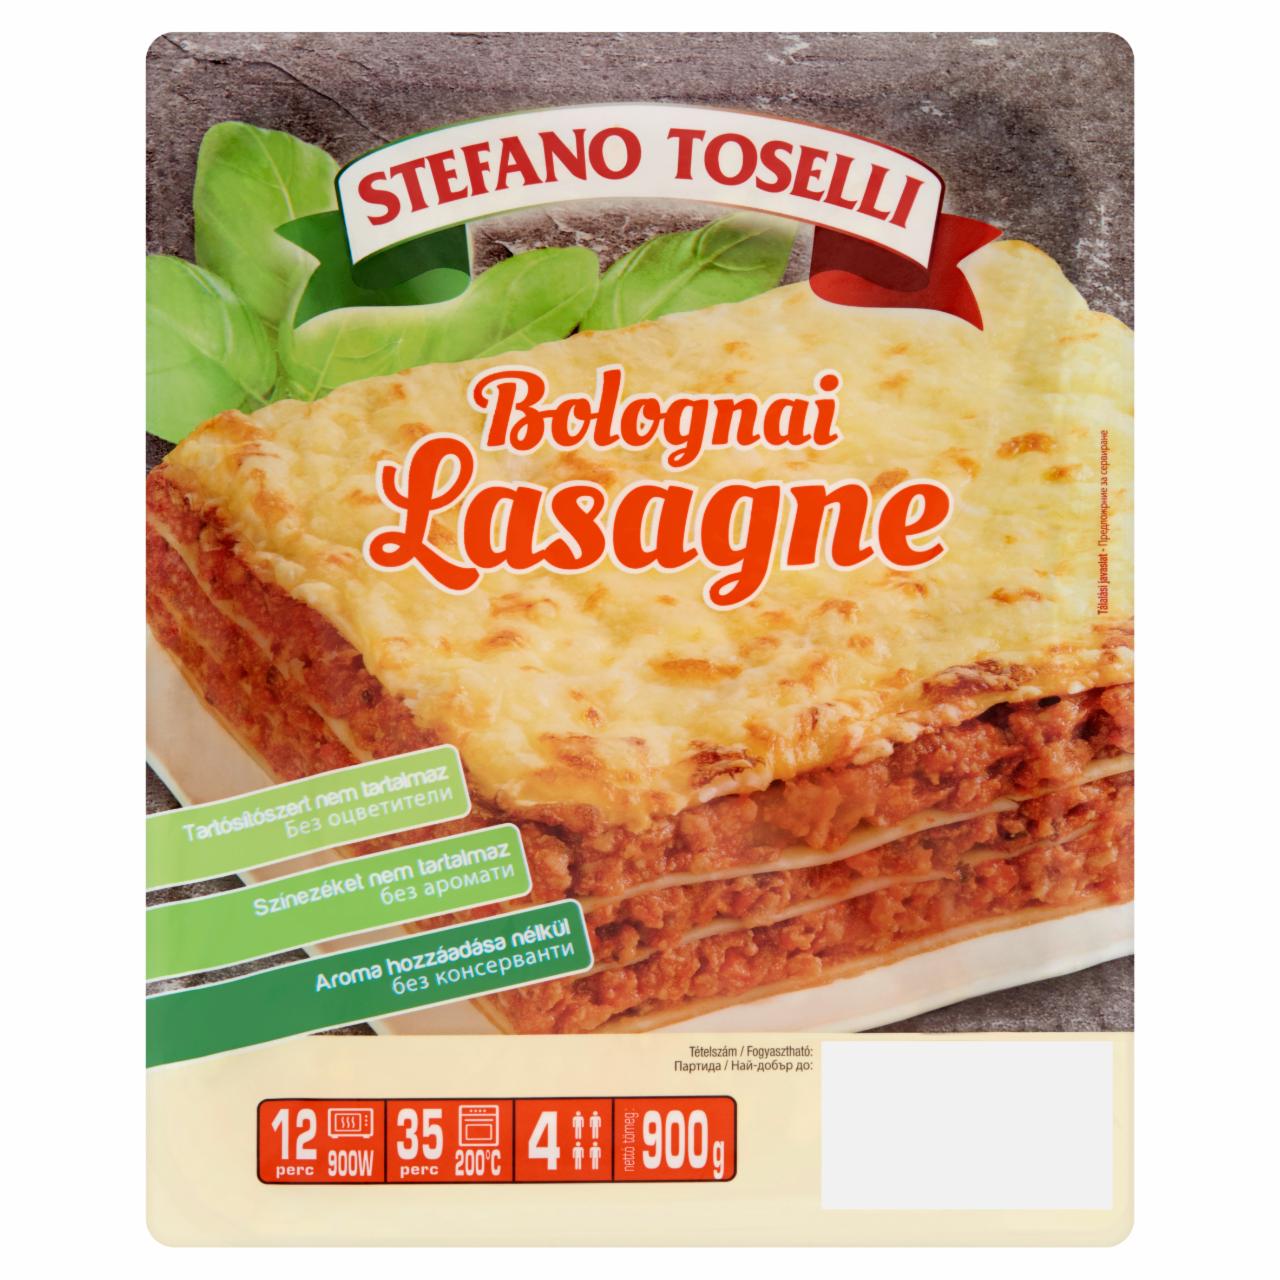 Képek - Stefano Toselli bolognai lasagne 900 g